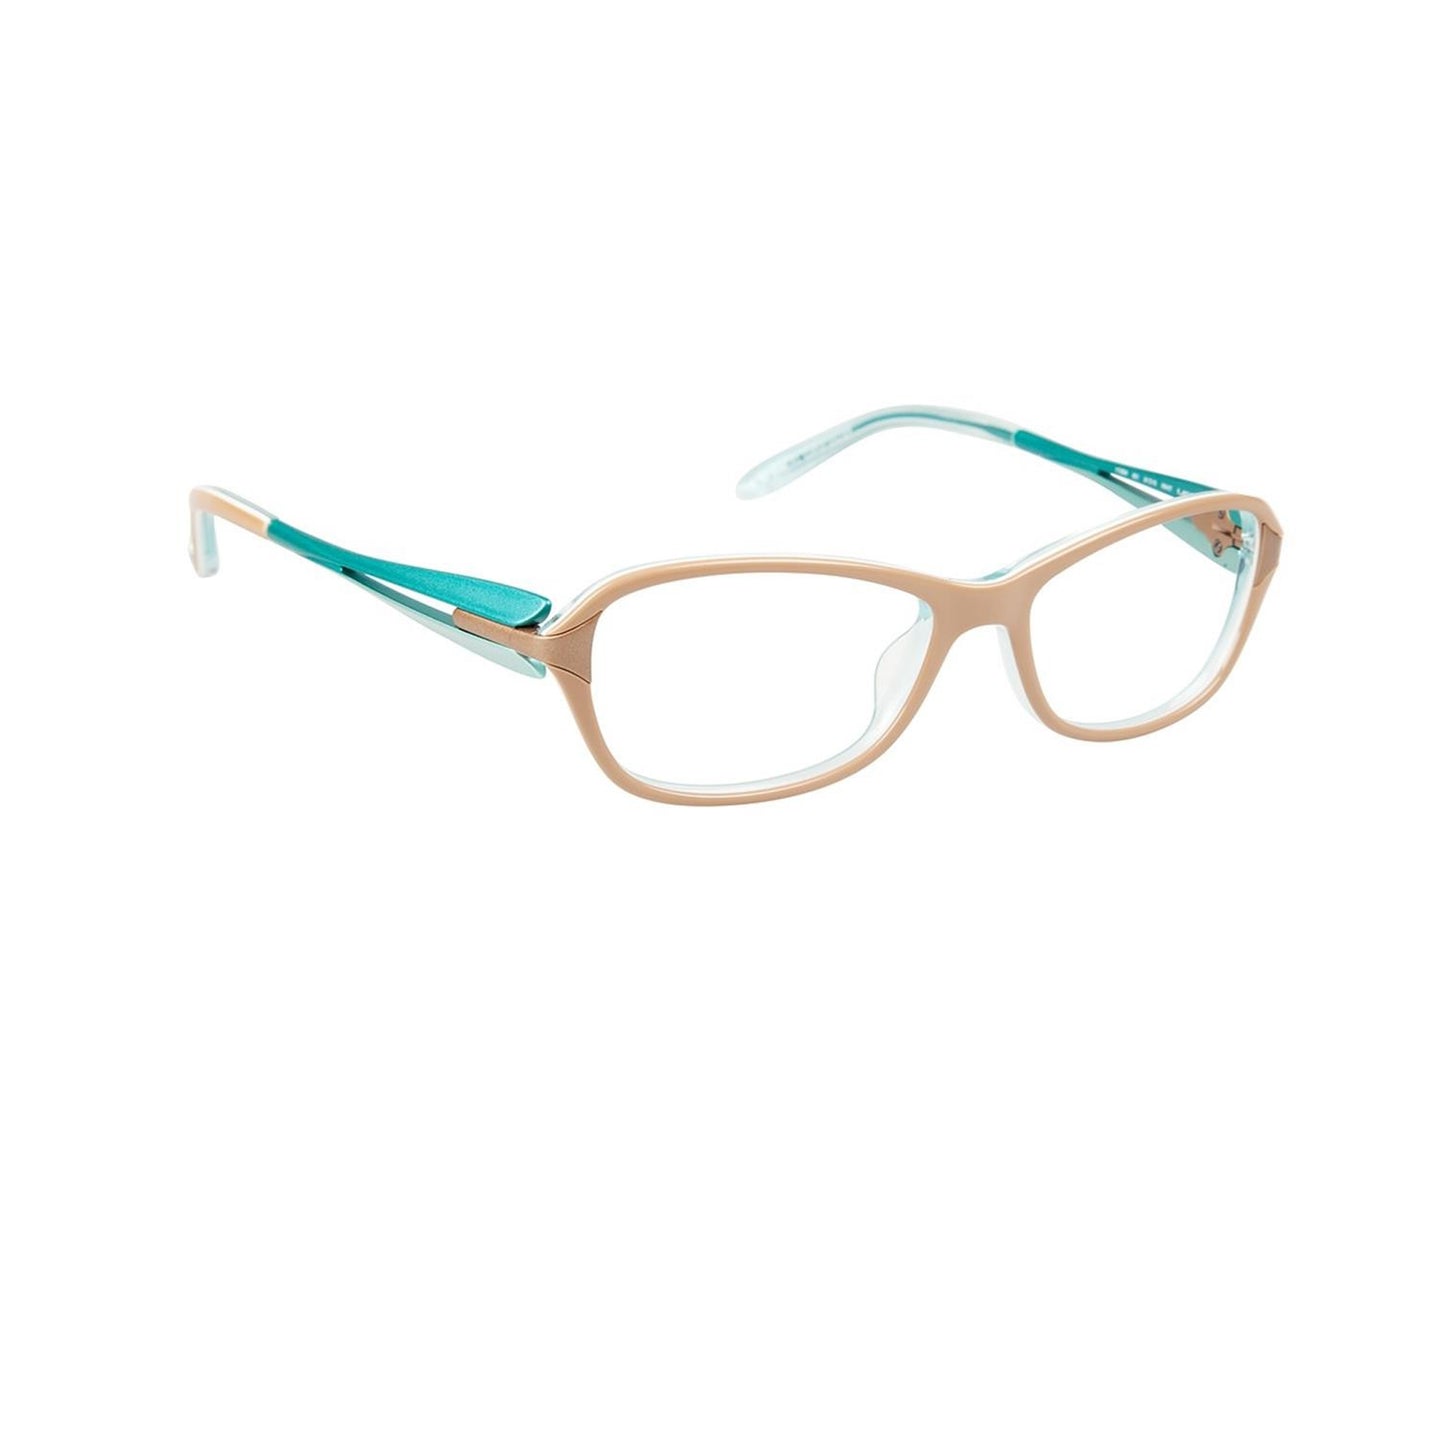 Koali By Morel brown Square Acetate Full Rim Eyeglasses. Made in France 7346K